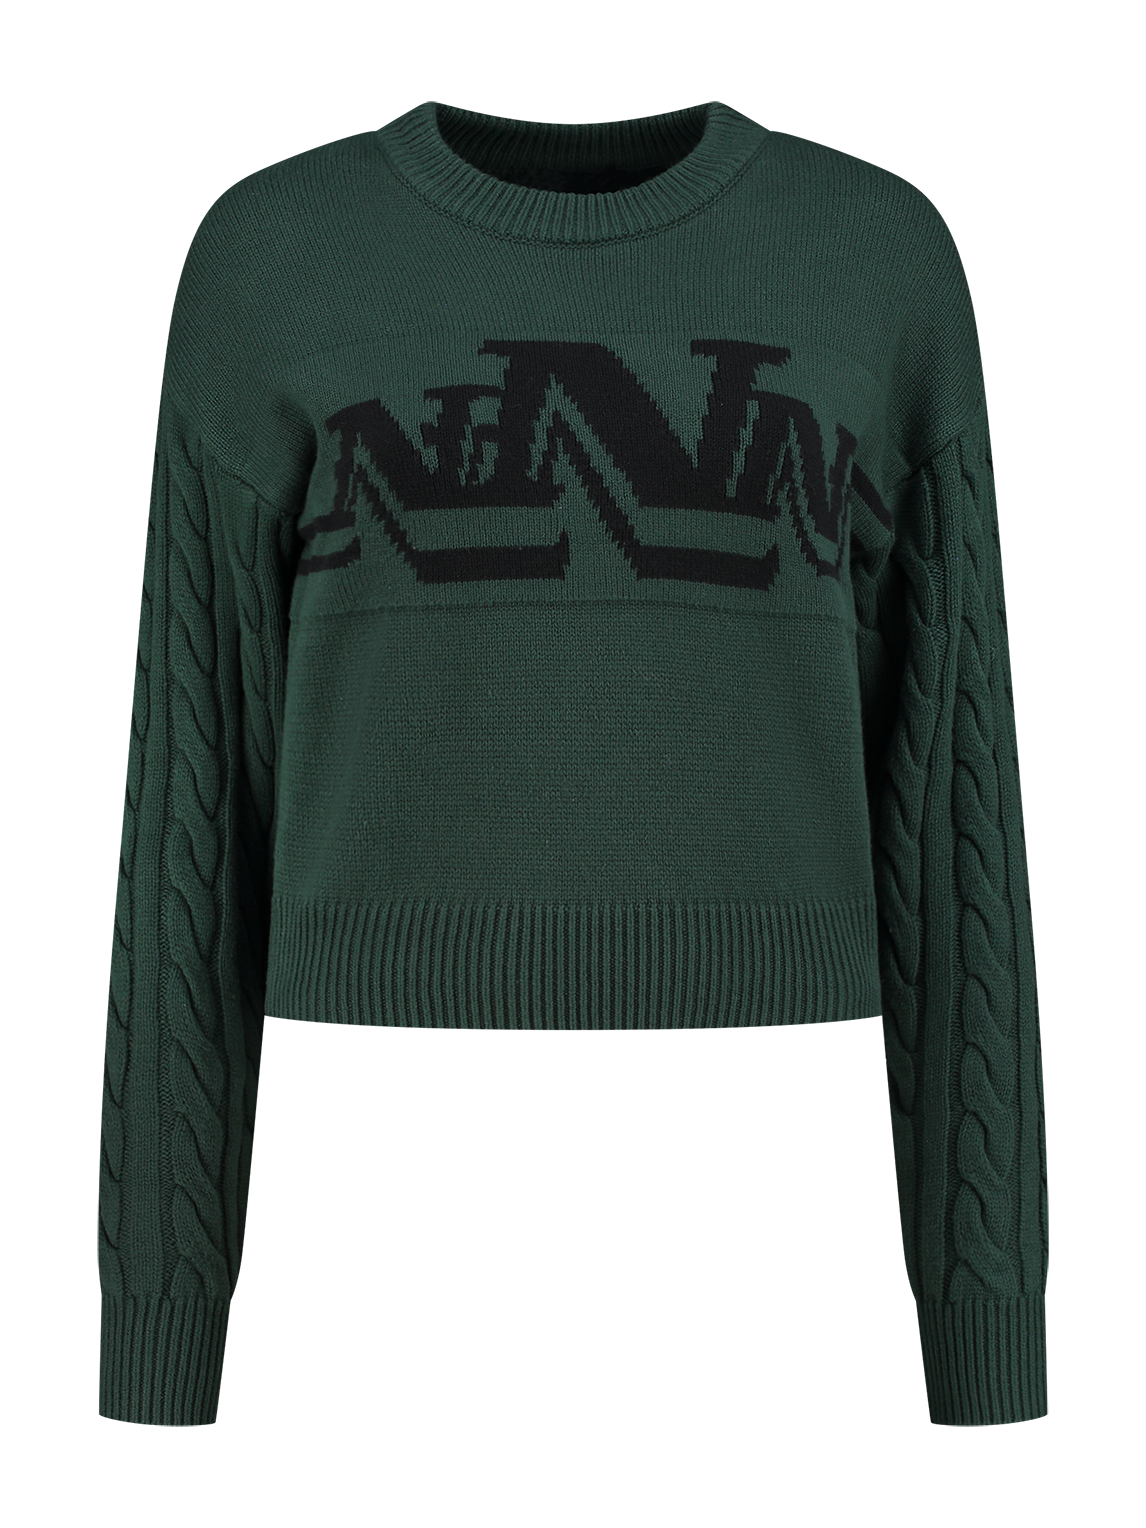 Sweater tally  N-7-229-2305 Garden green